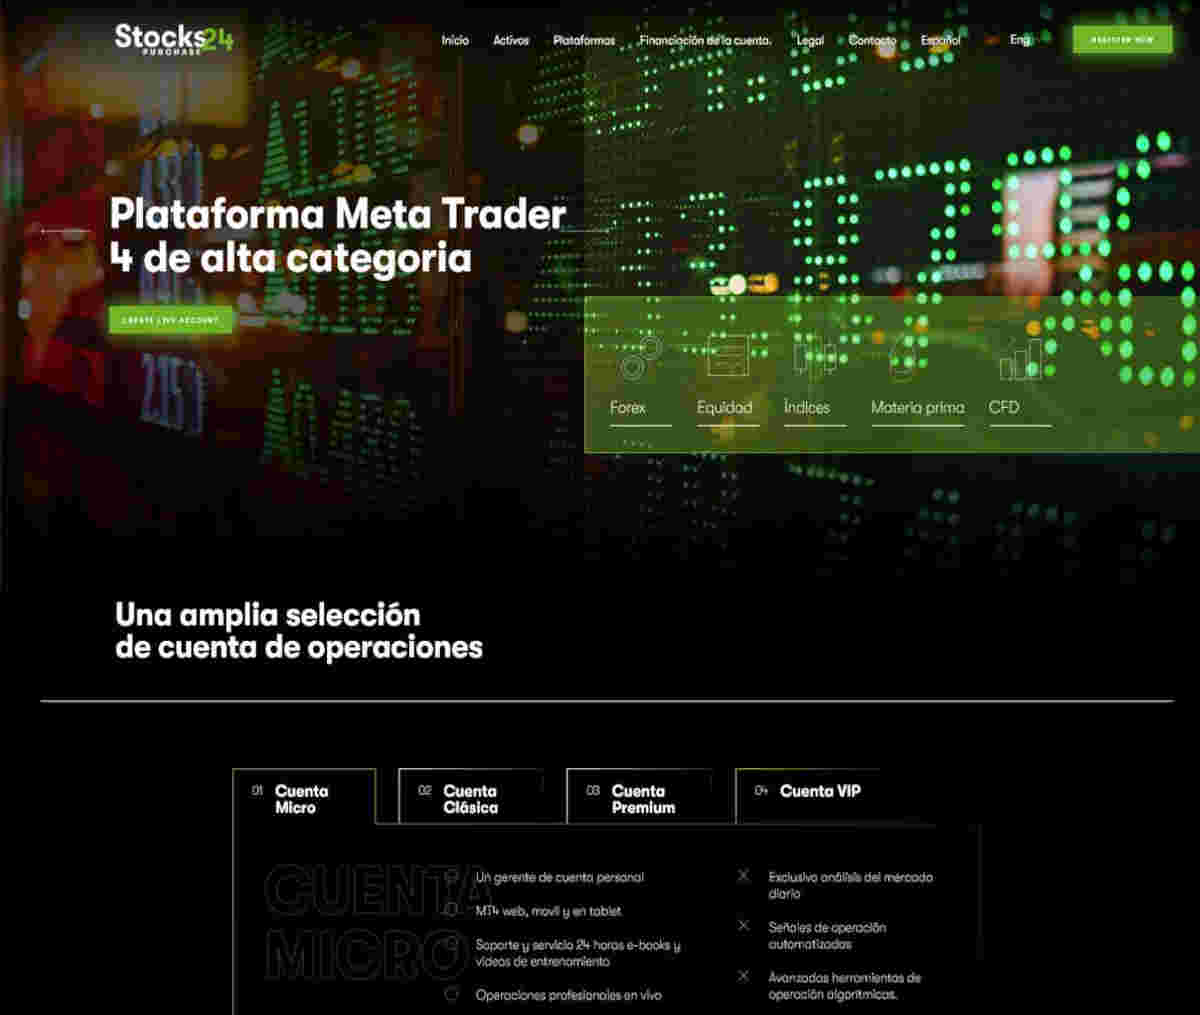 Página web de Stocks24